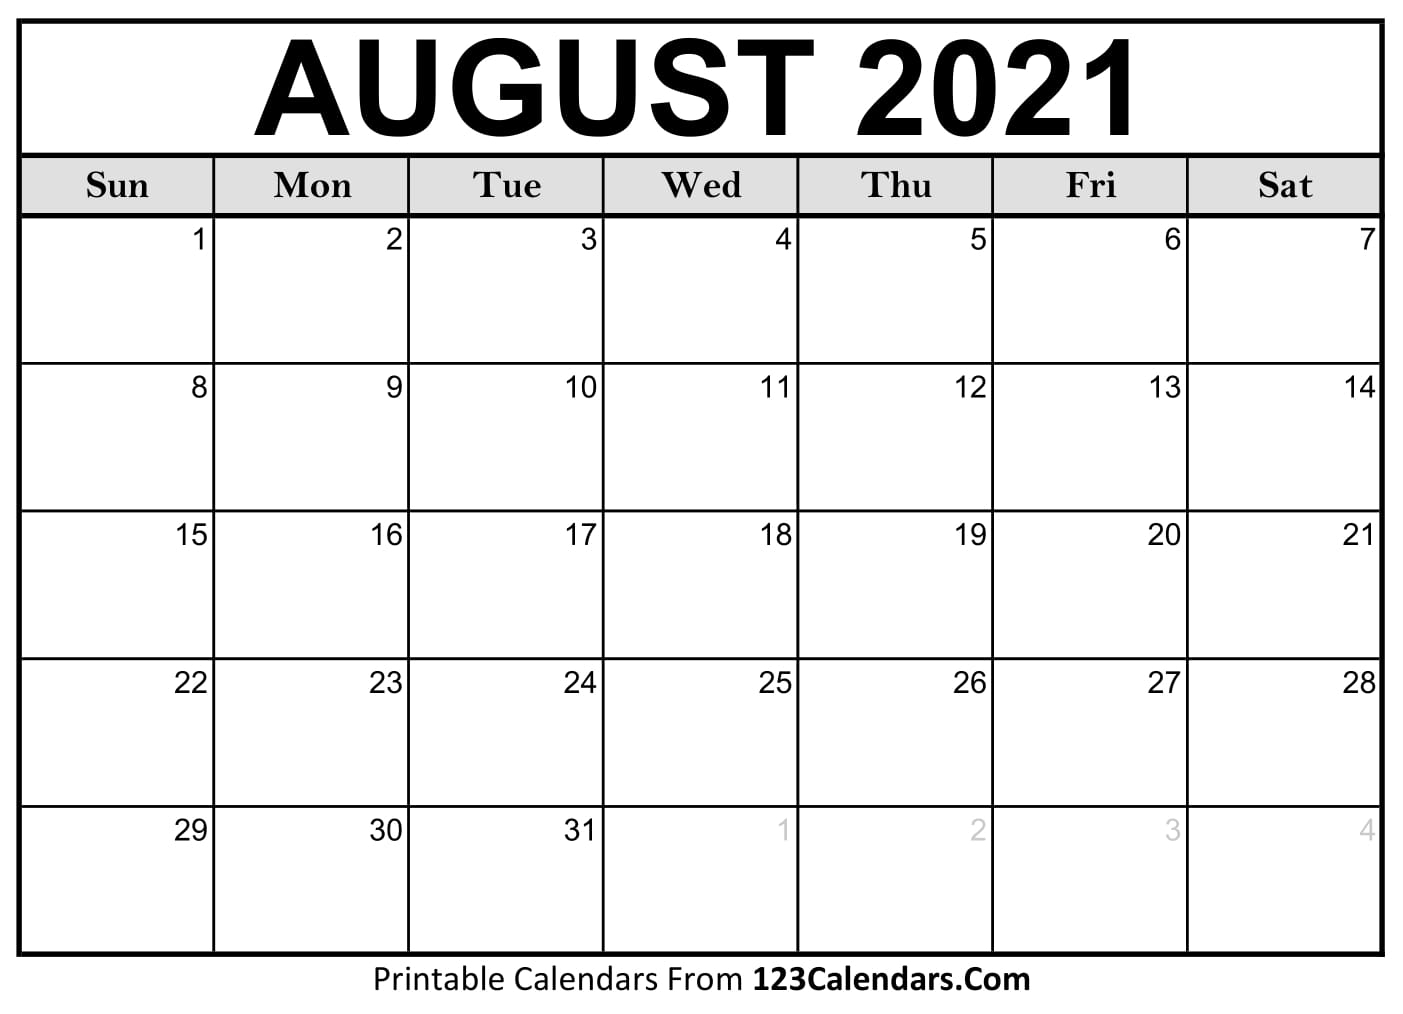 Printable August 2021 Calendar Templates - 123Calendars